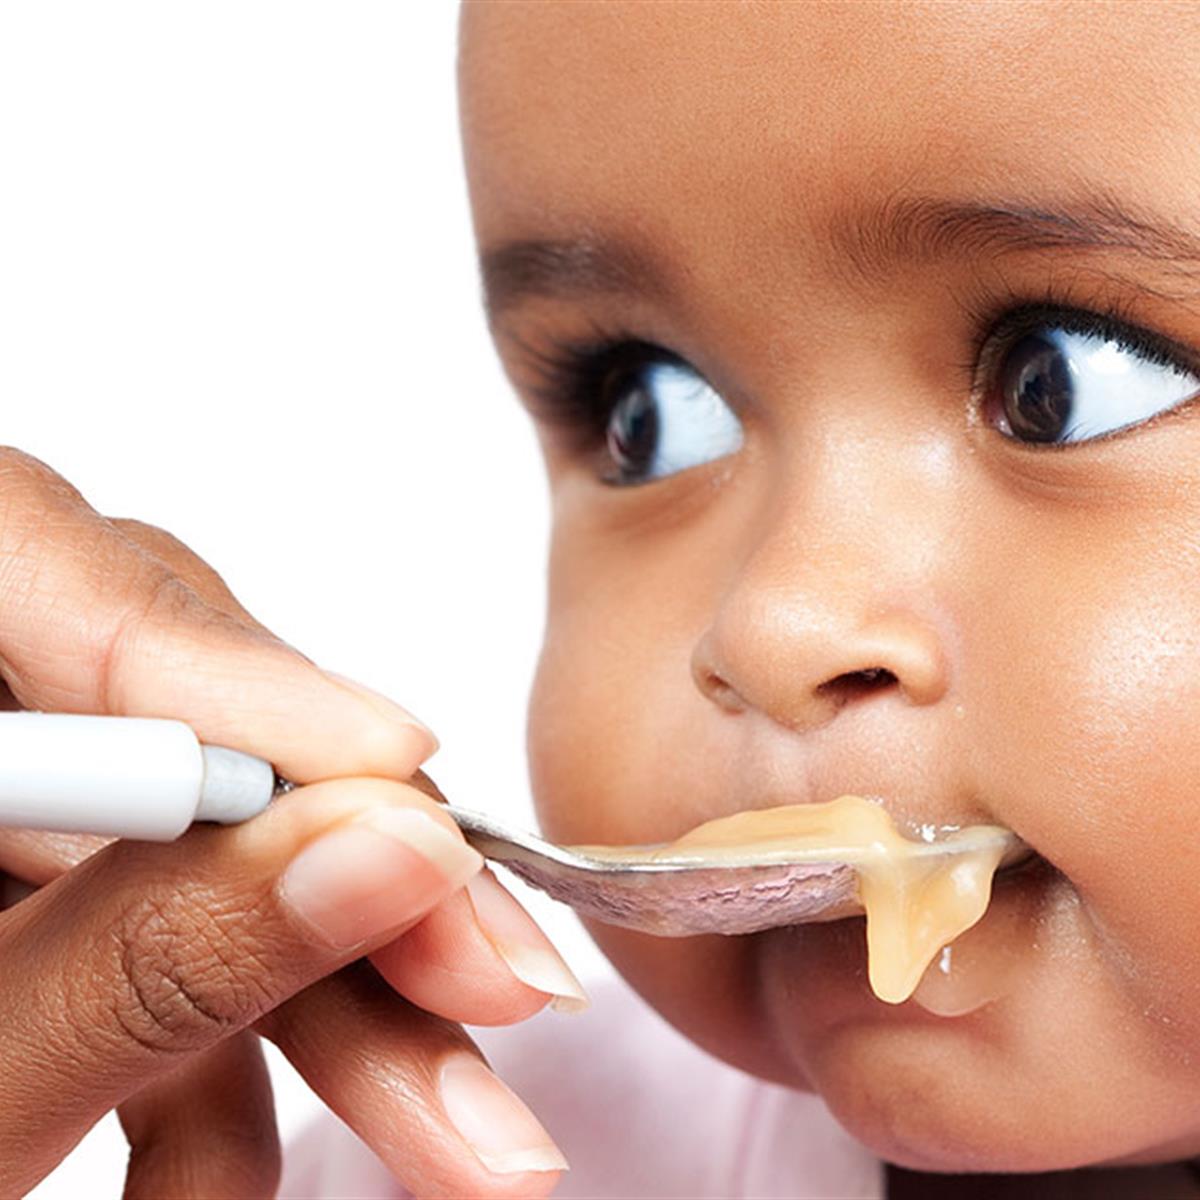 https://www.healthychildren.org/SiteCollectionImagesArticleImages/baby-being-fed-baby-food.jpg?RenditionID=6